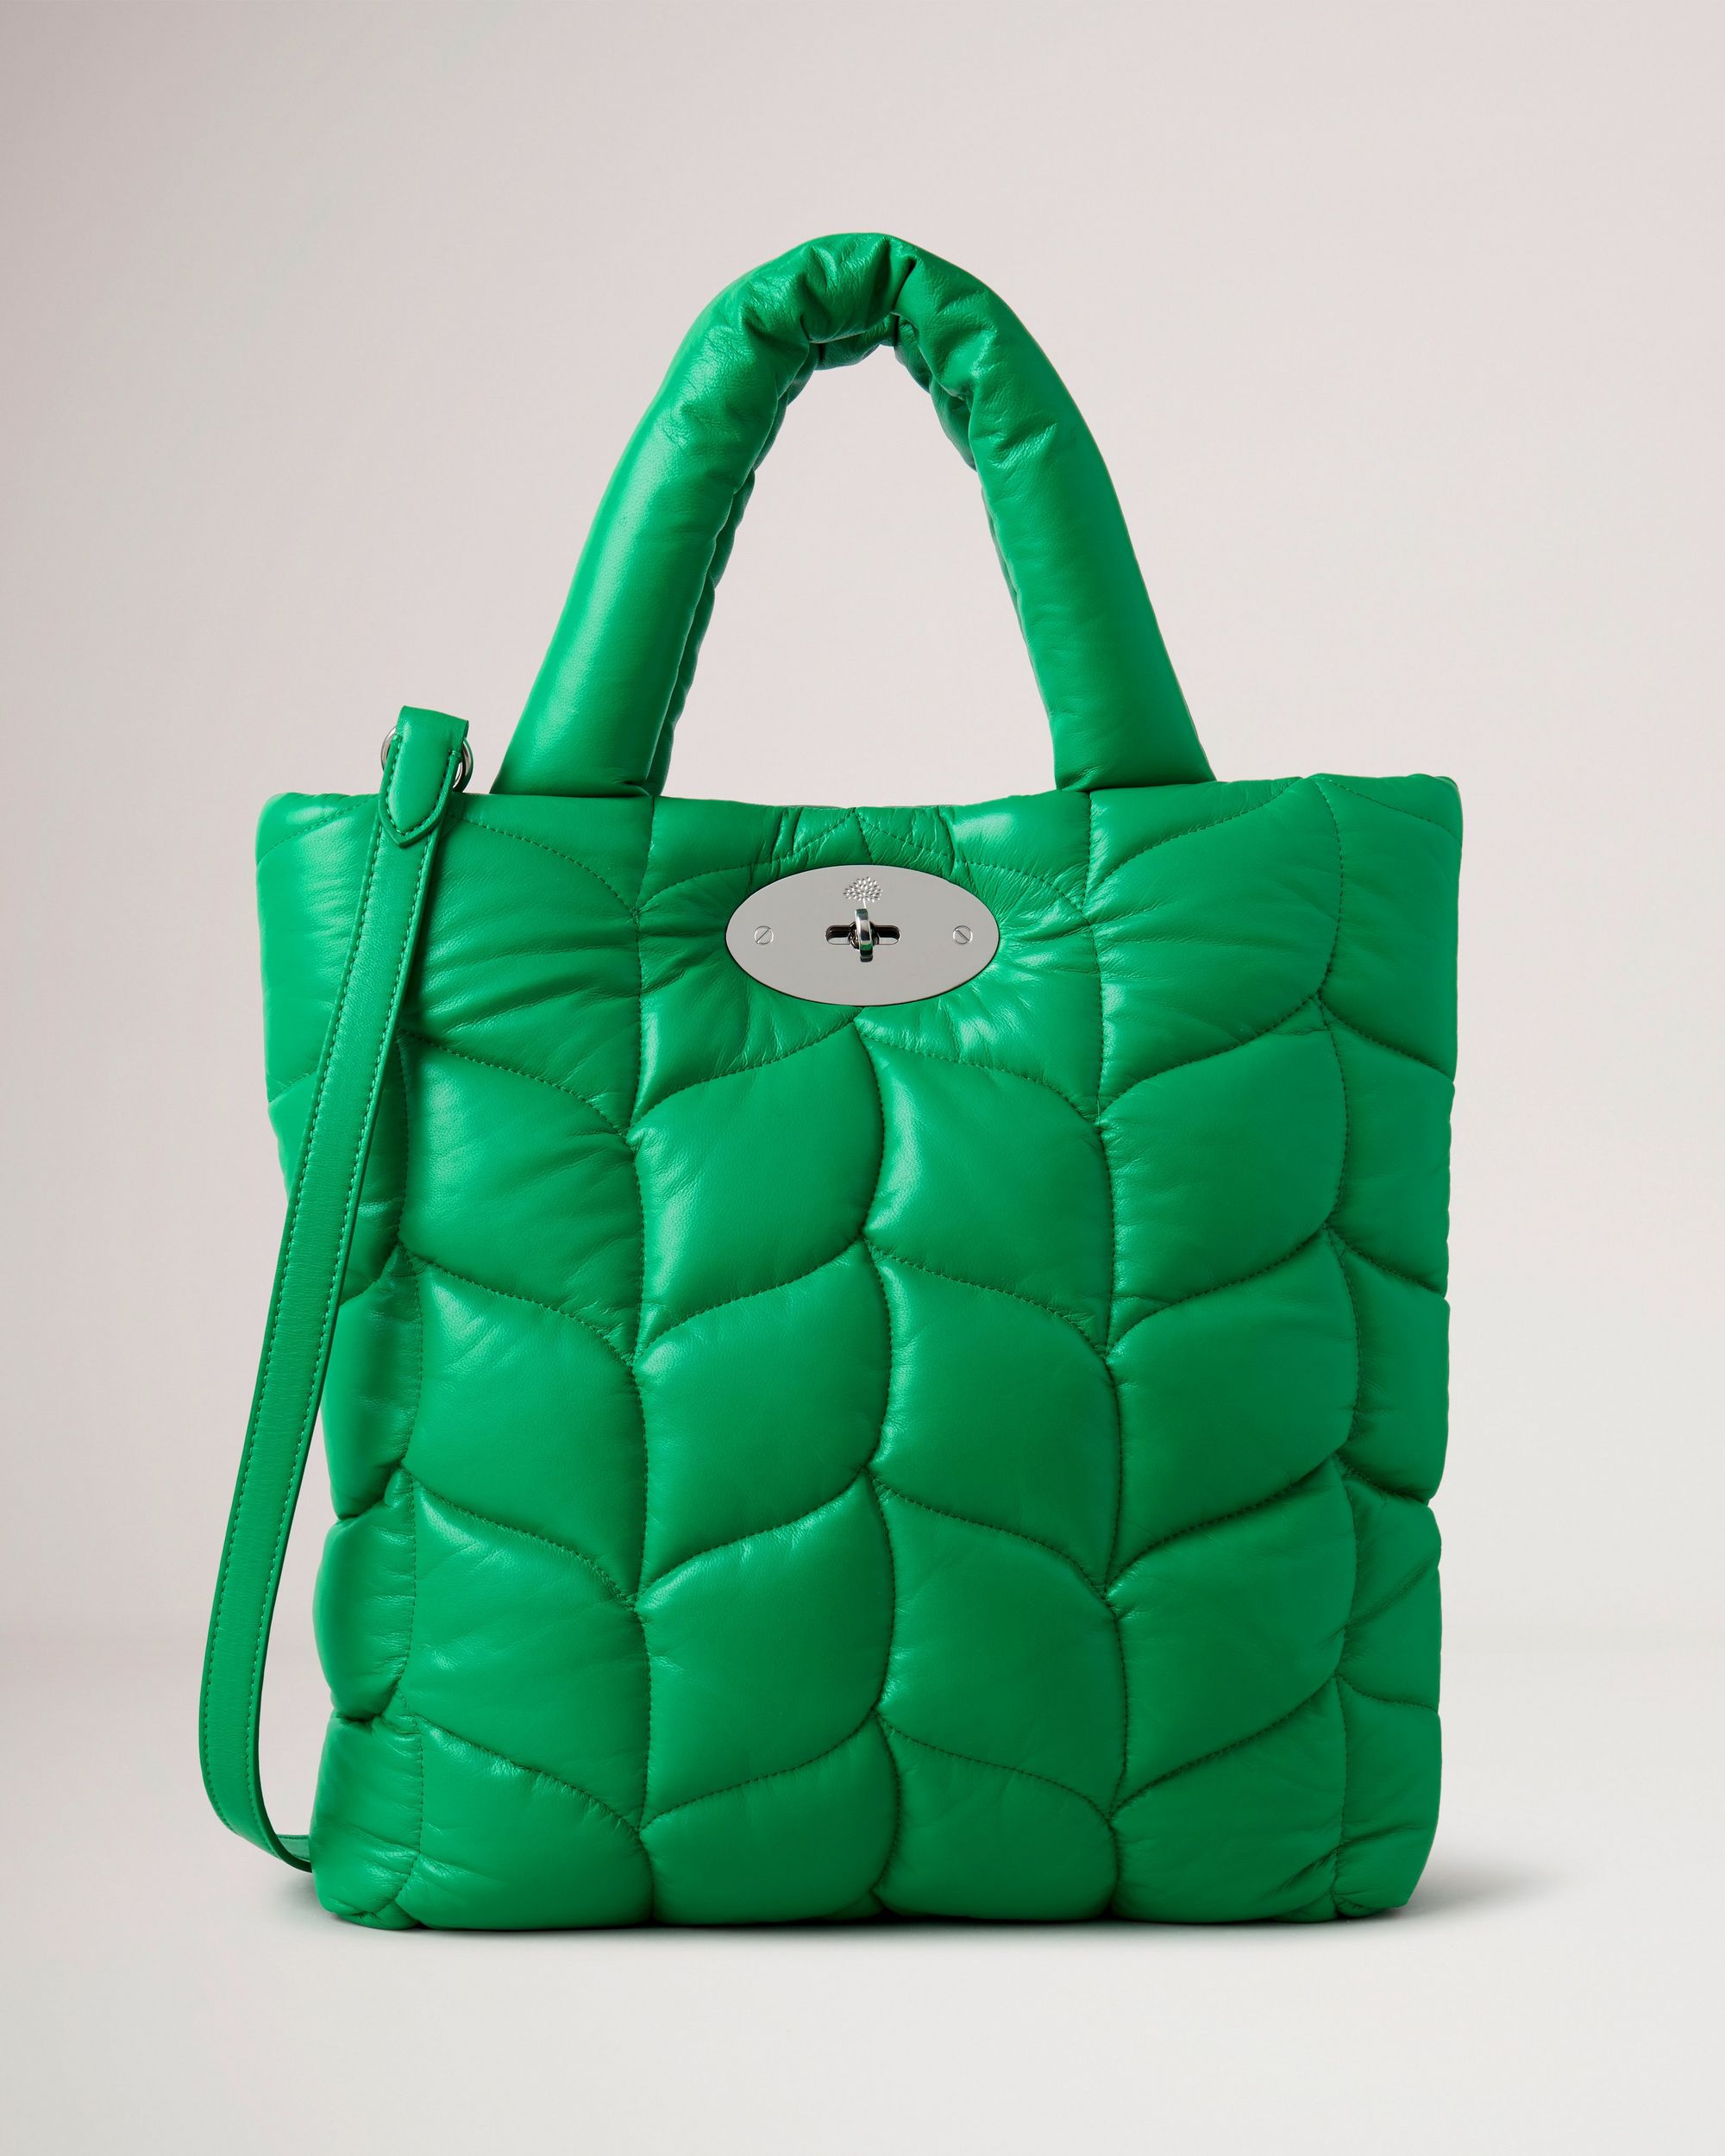 Green luxury tote bag